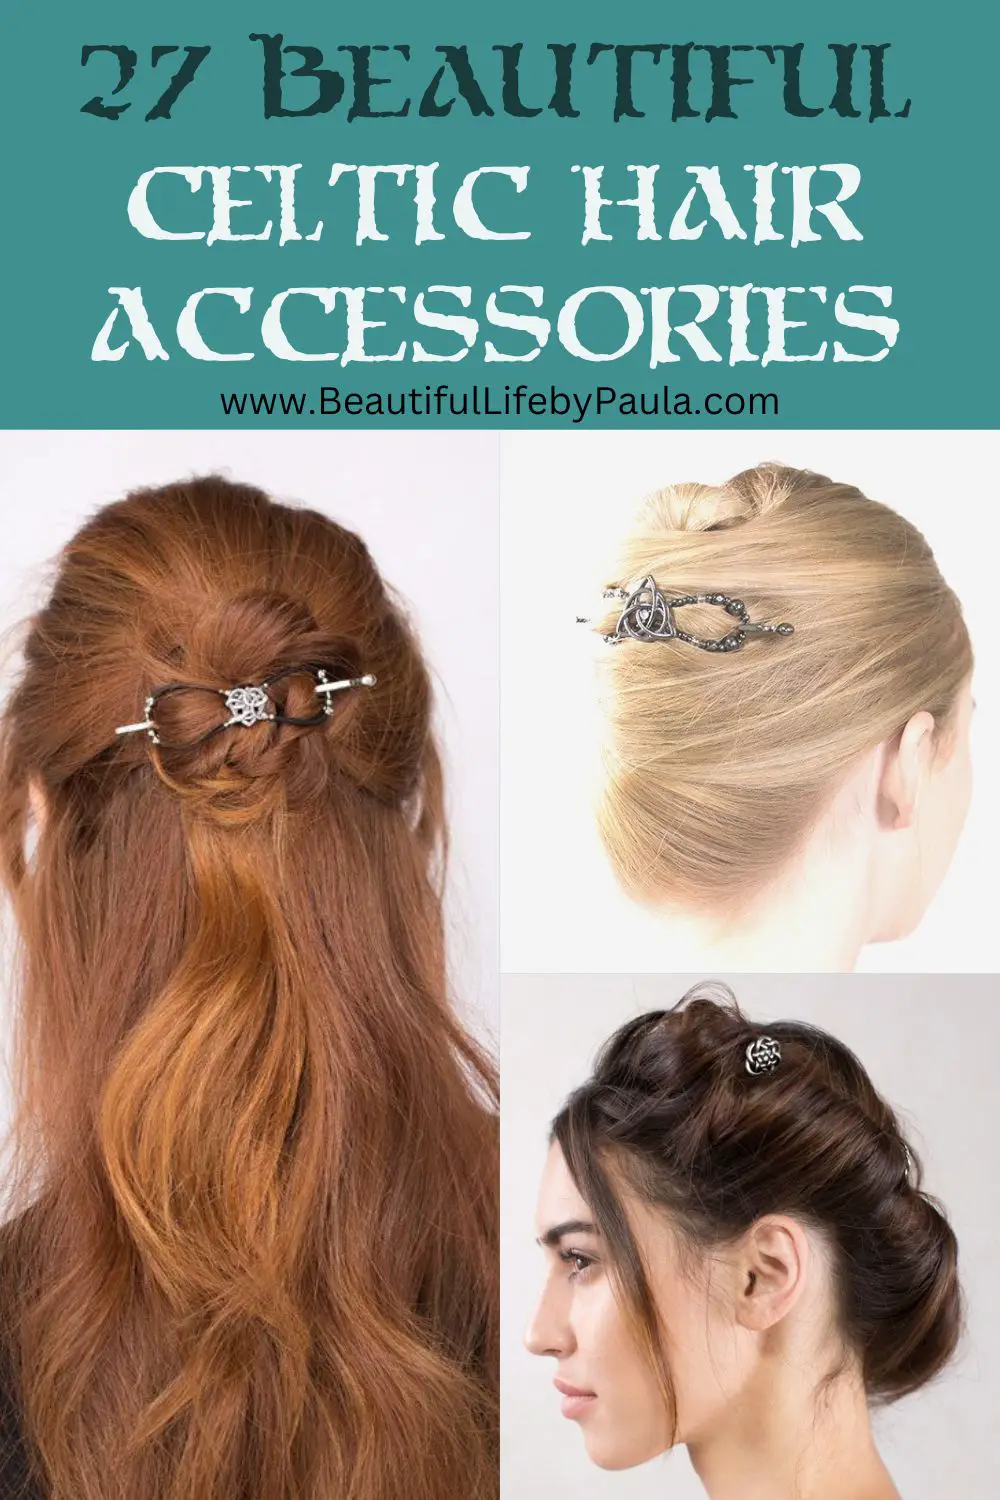 27 beautiful Celtic hair accessories